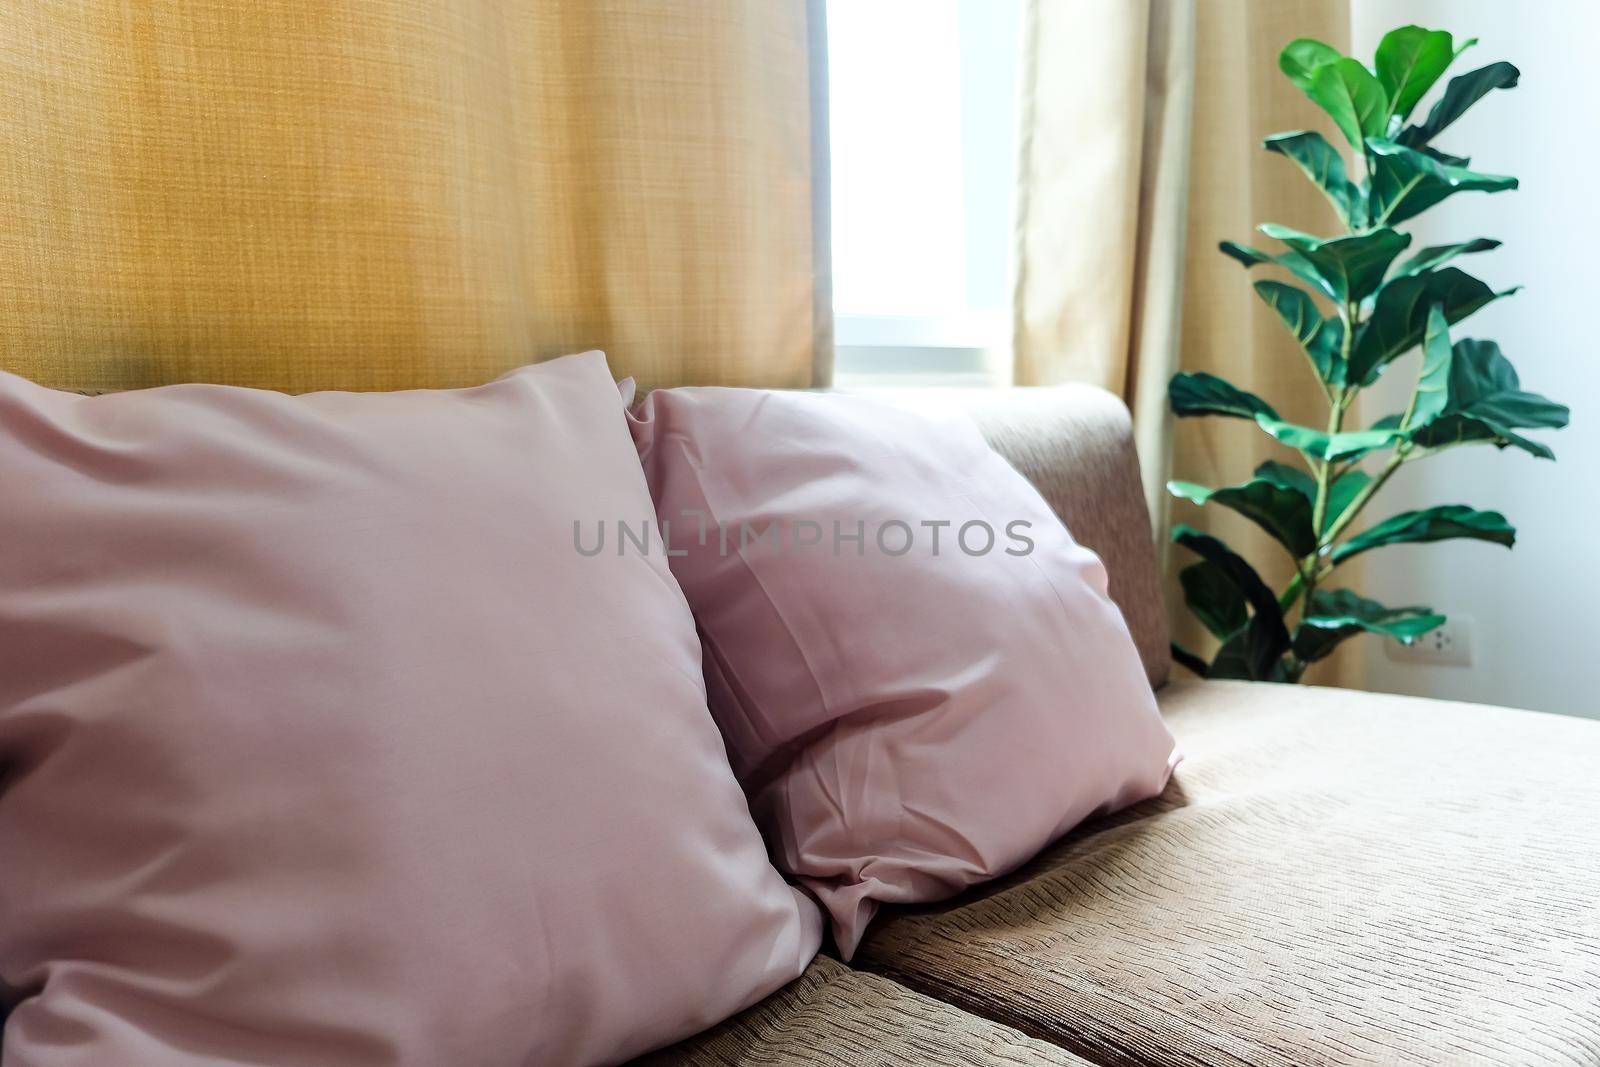 Interior decor, artificial plant decoration in bedroom.